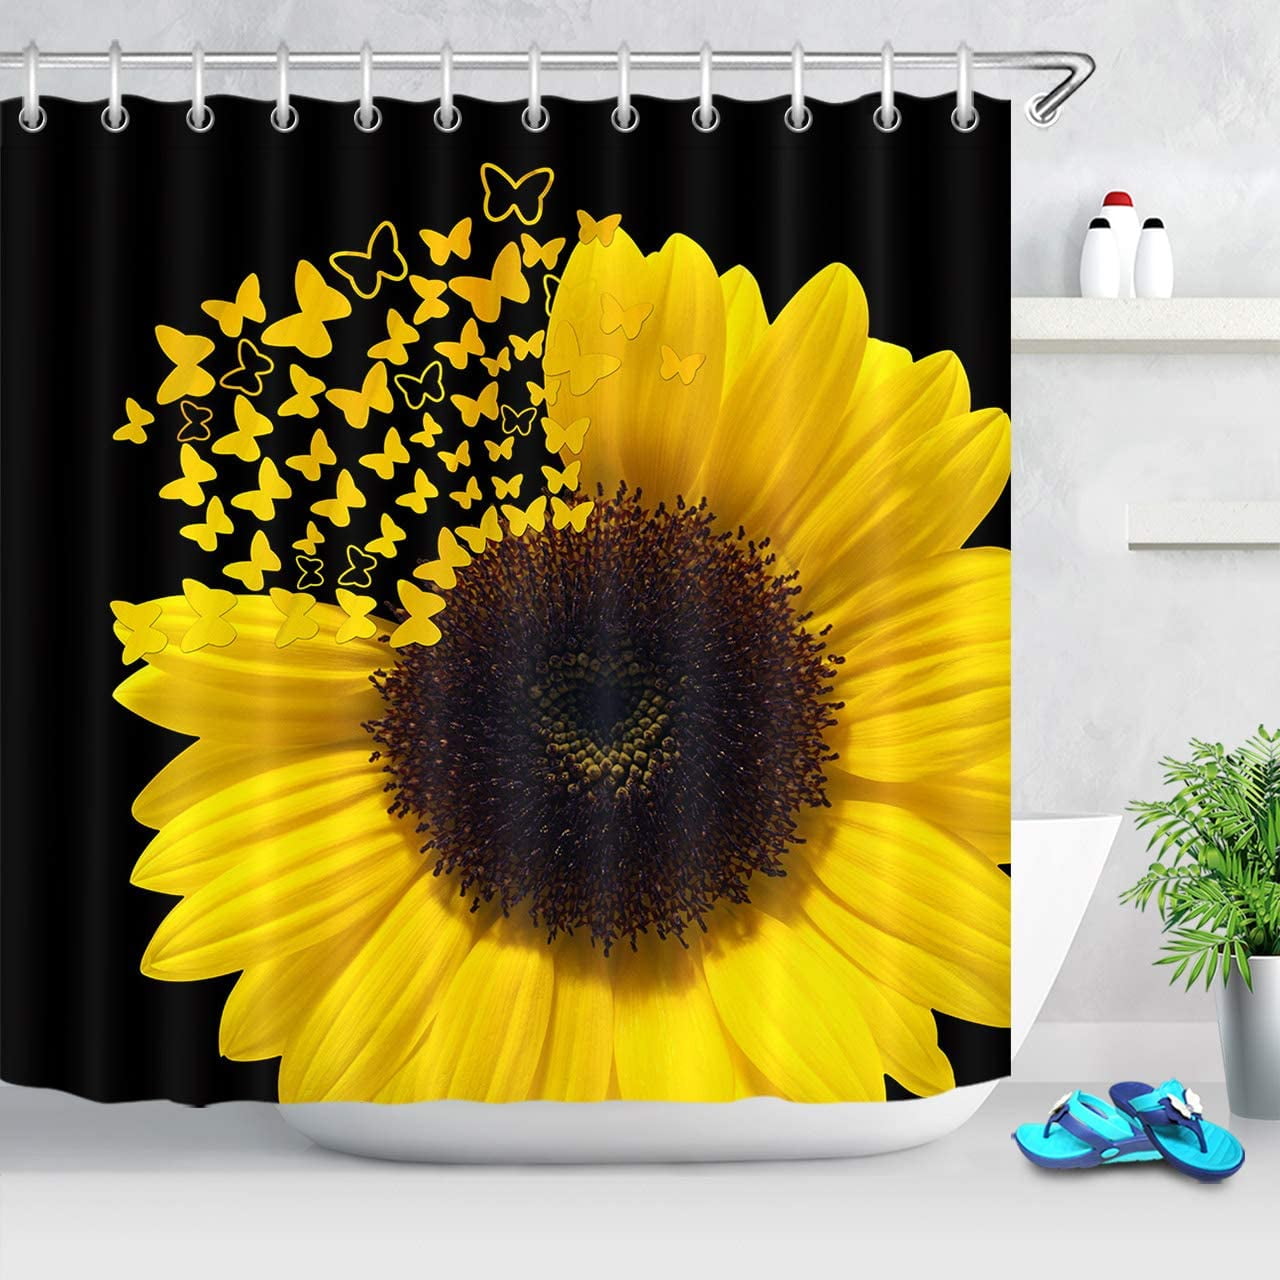 Sunflower Shower Curtain Set Tropical Flowers Get Naked Bathroom Decor w/ Hooks 